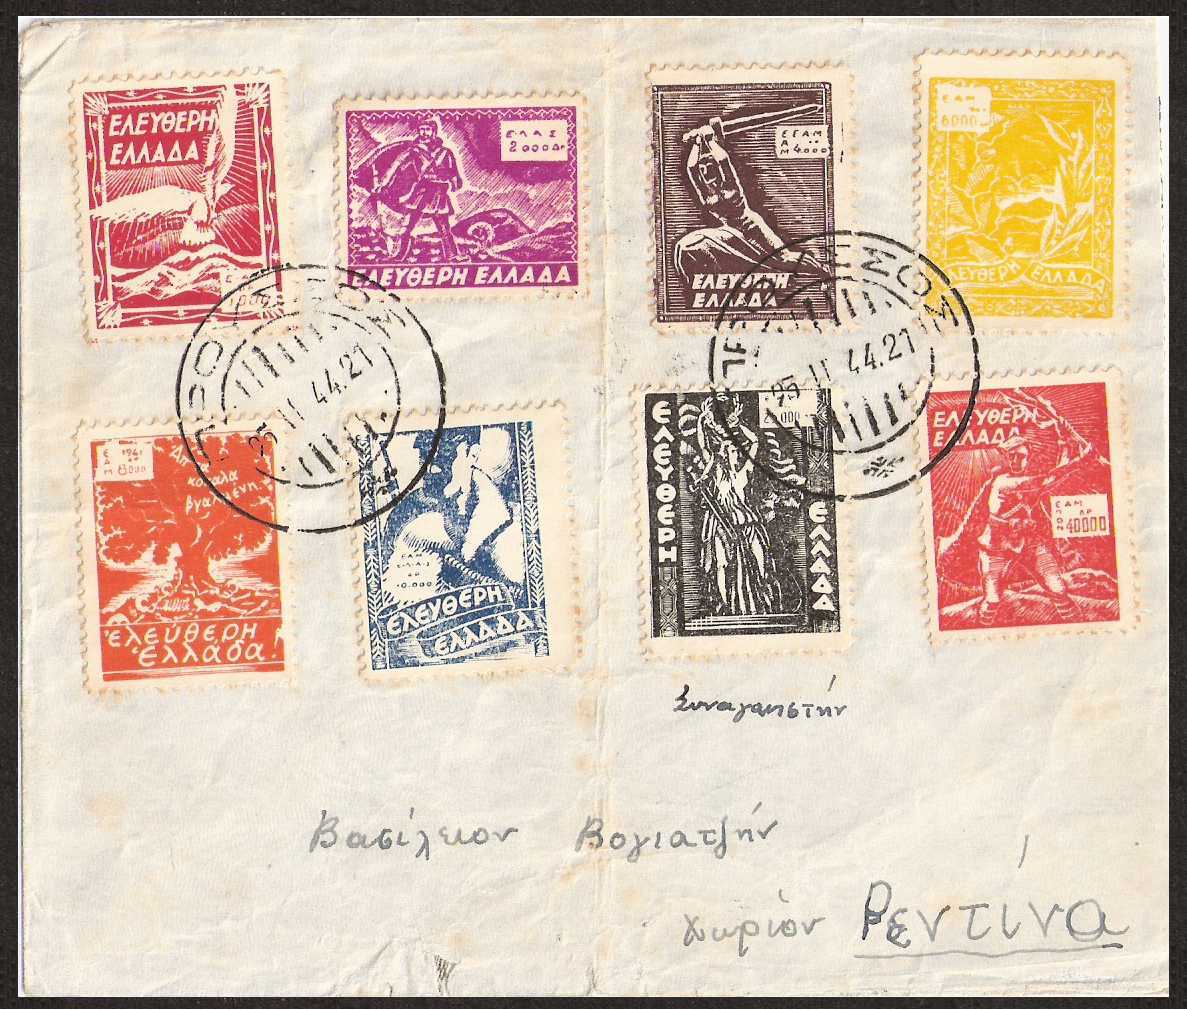 25 2 1944 Hellas Eleftheri Ellada Local Issue Letter obv